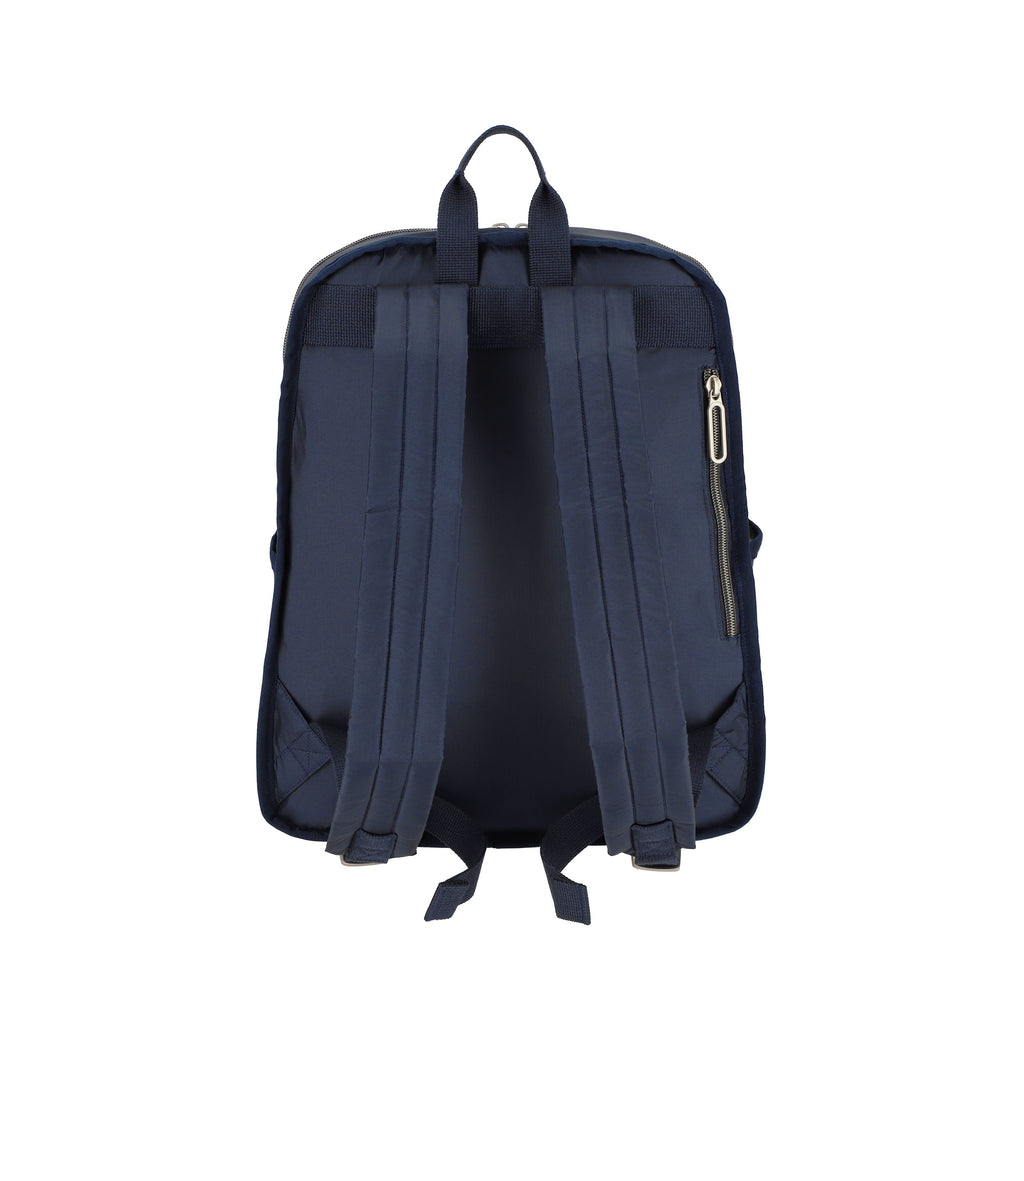 Functional Backpack - 22148453105712